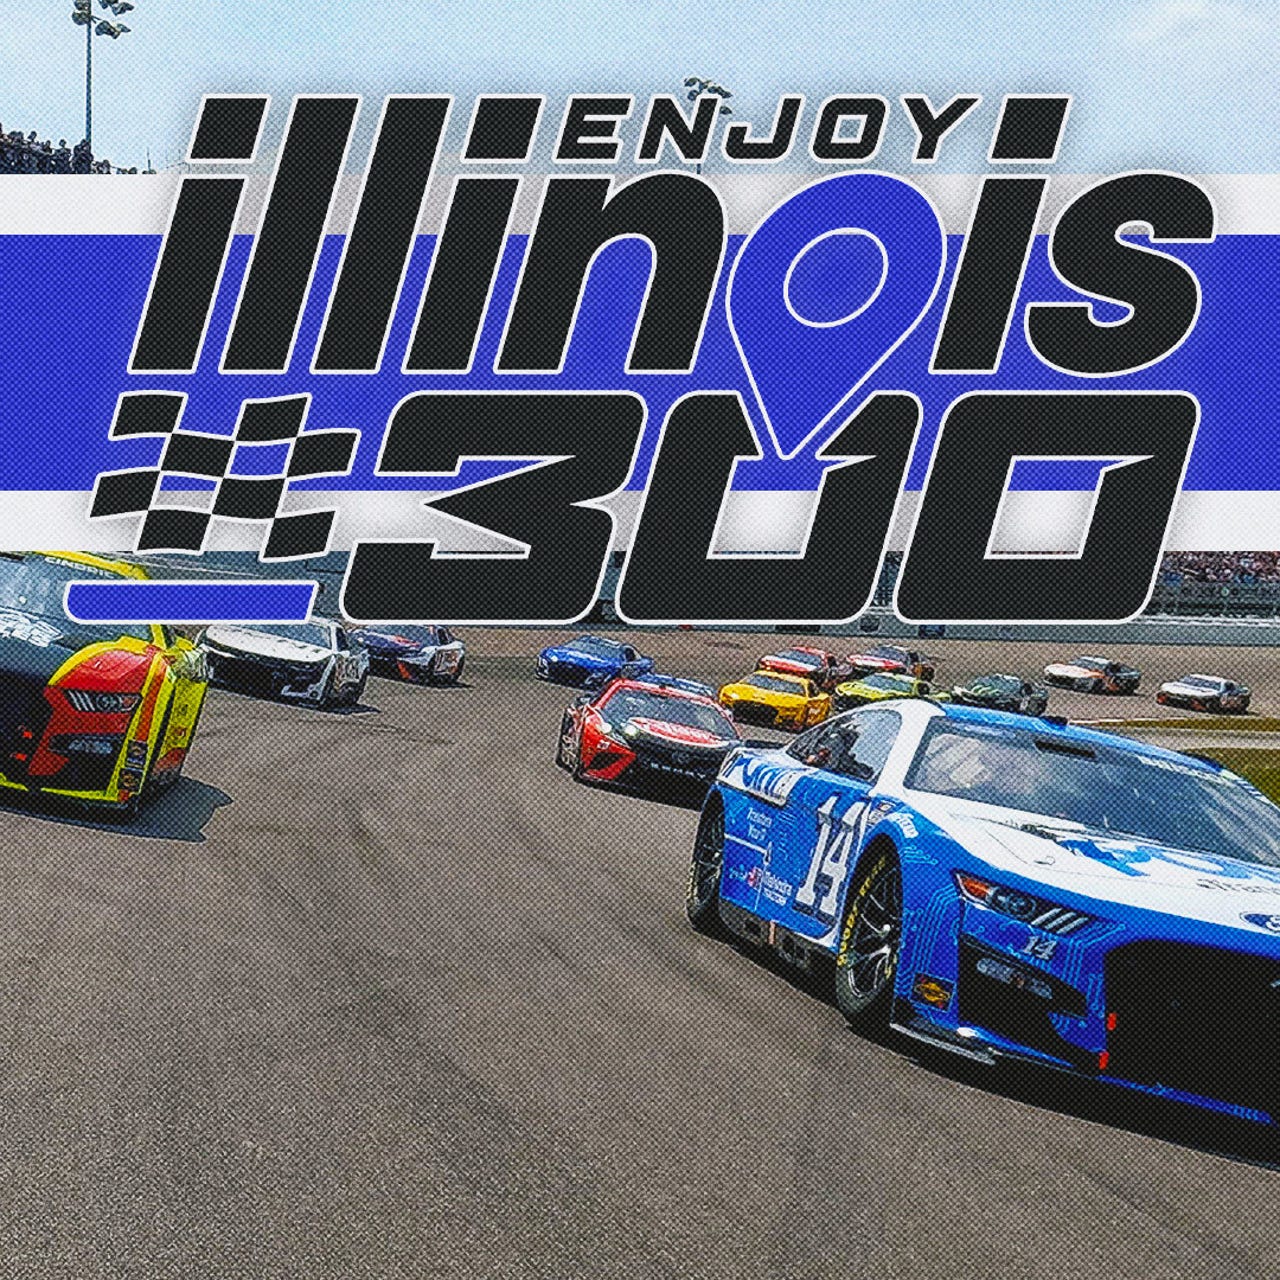 Auto Racing in Illinois